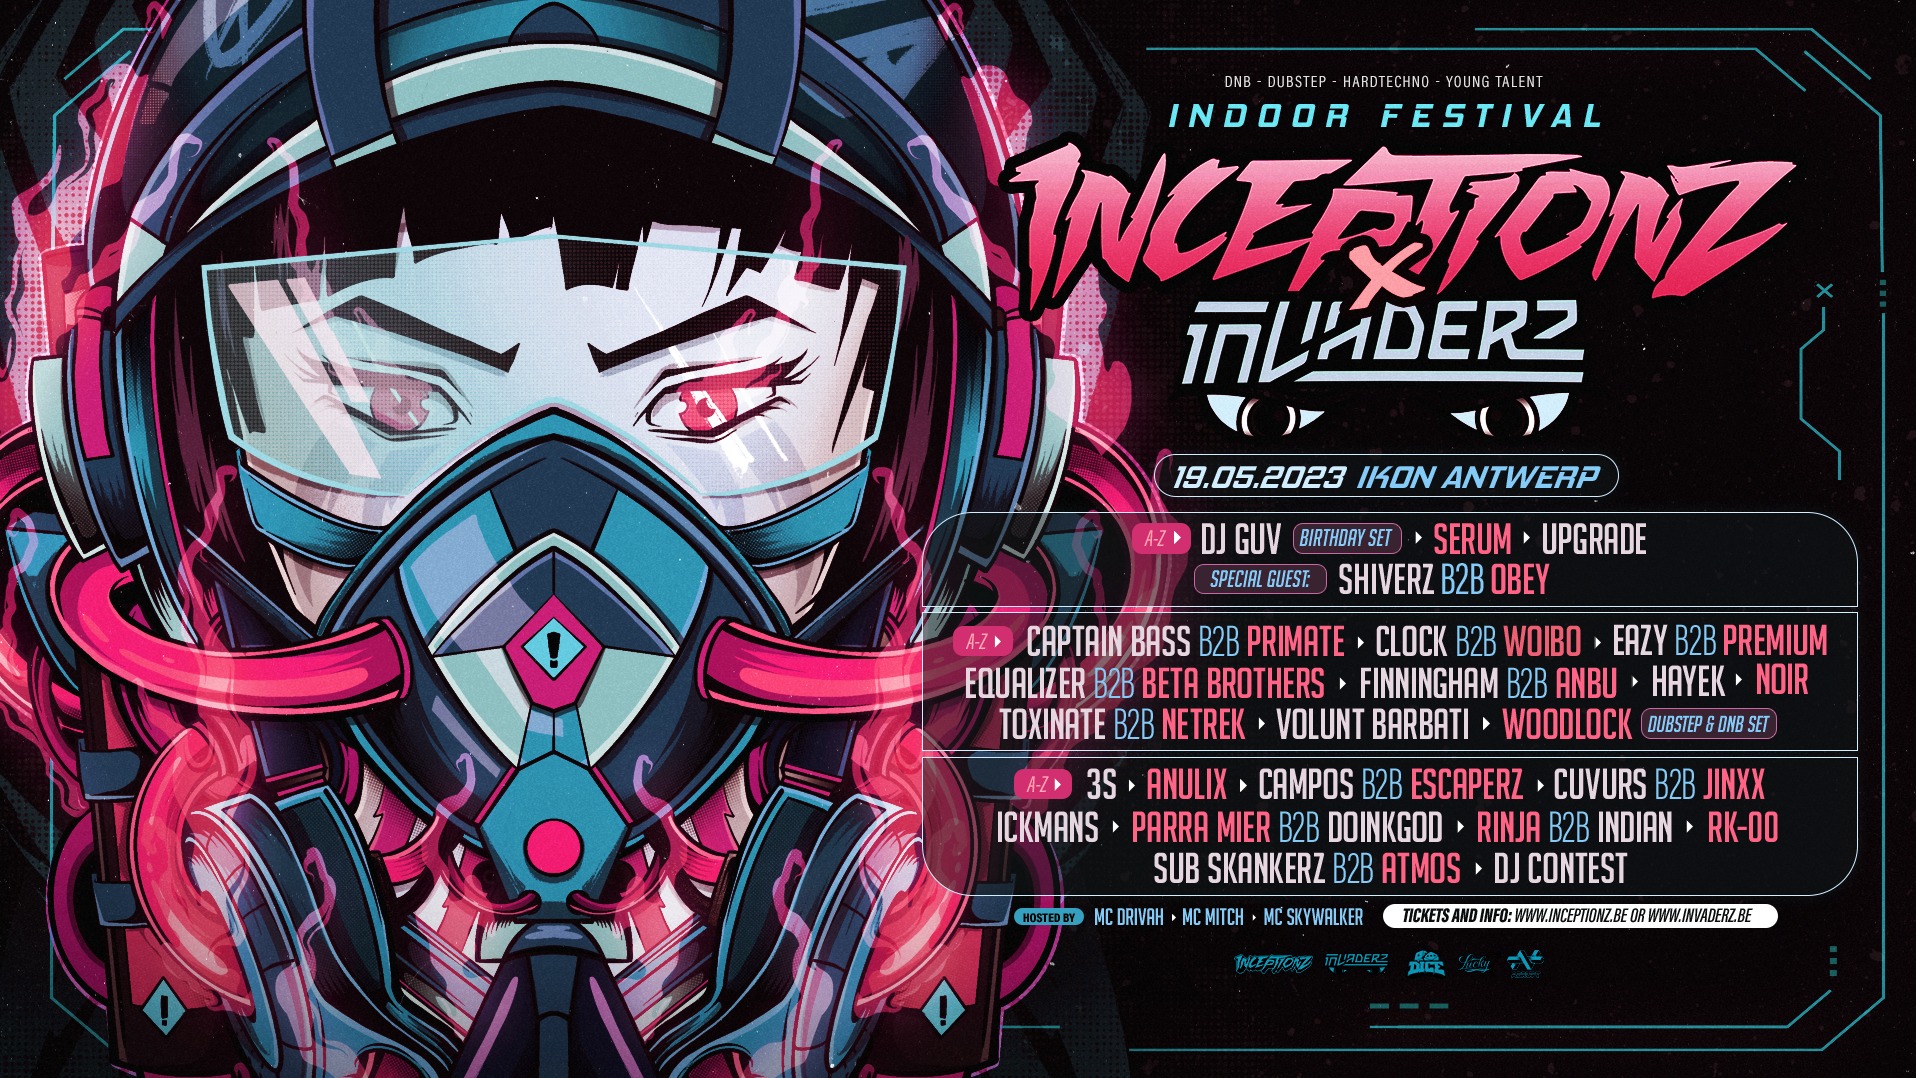 Inceptionz x Invaderz: Indoor Festival